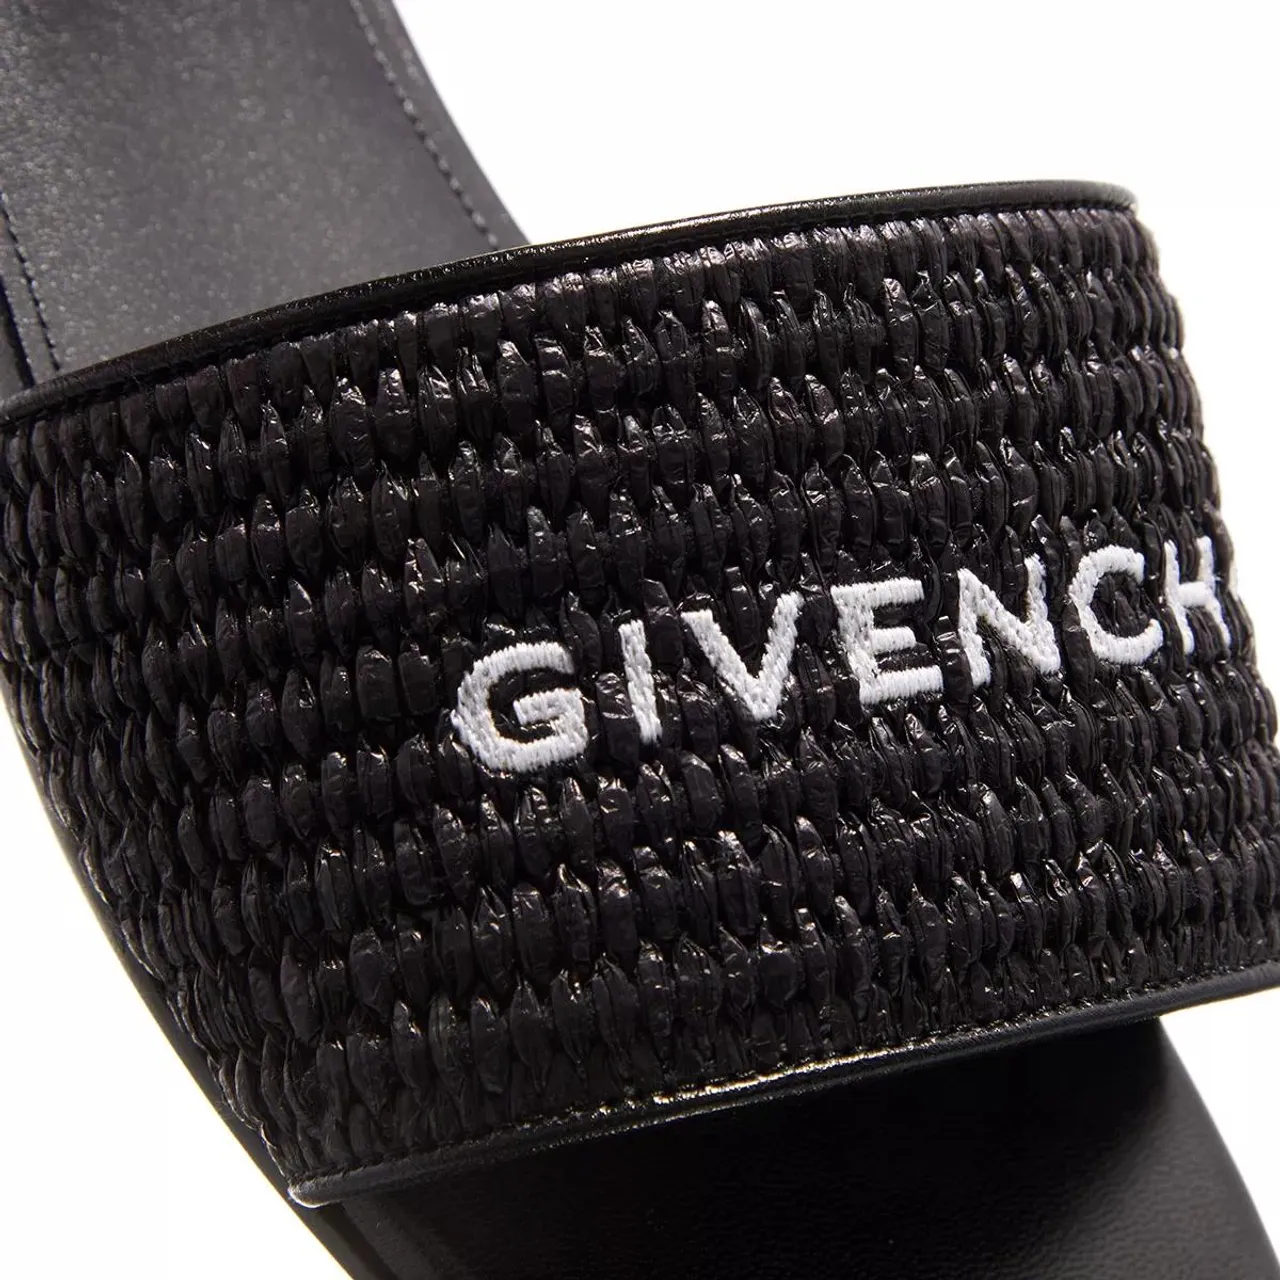 Givenchy Sandals - Sandals Slide 4G In Refia - black - Sandals for ladies